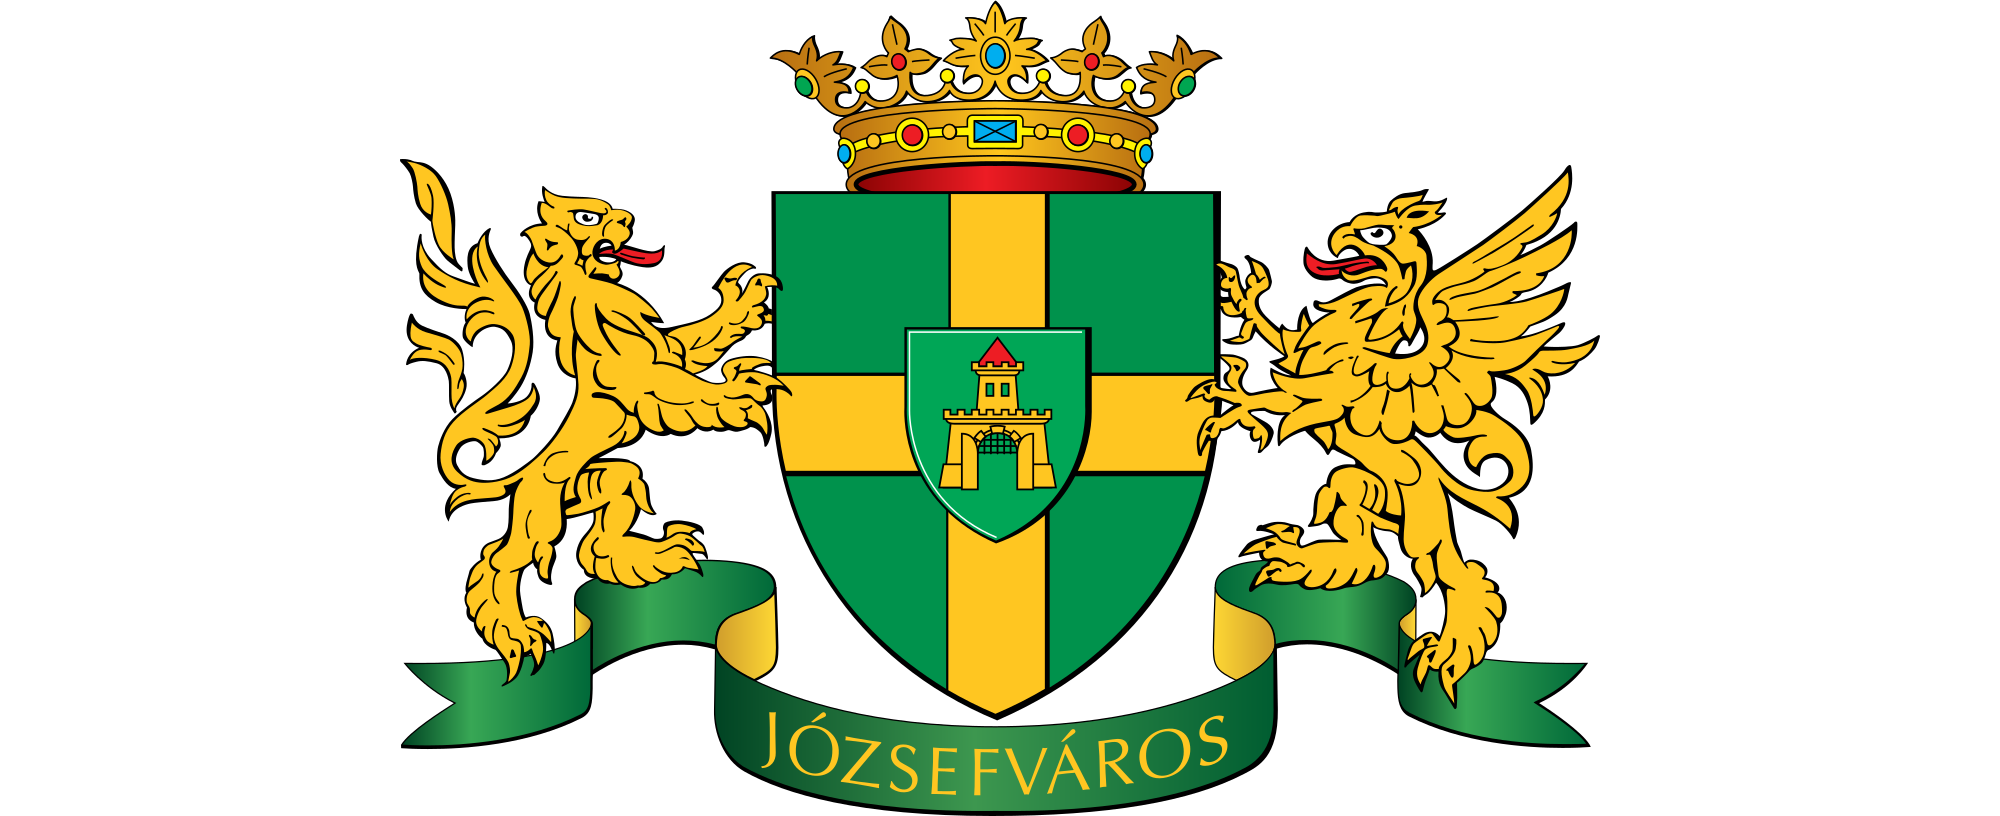 Józsefváros district supports Lahmacun radio